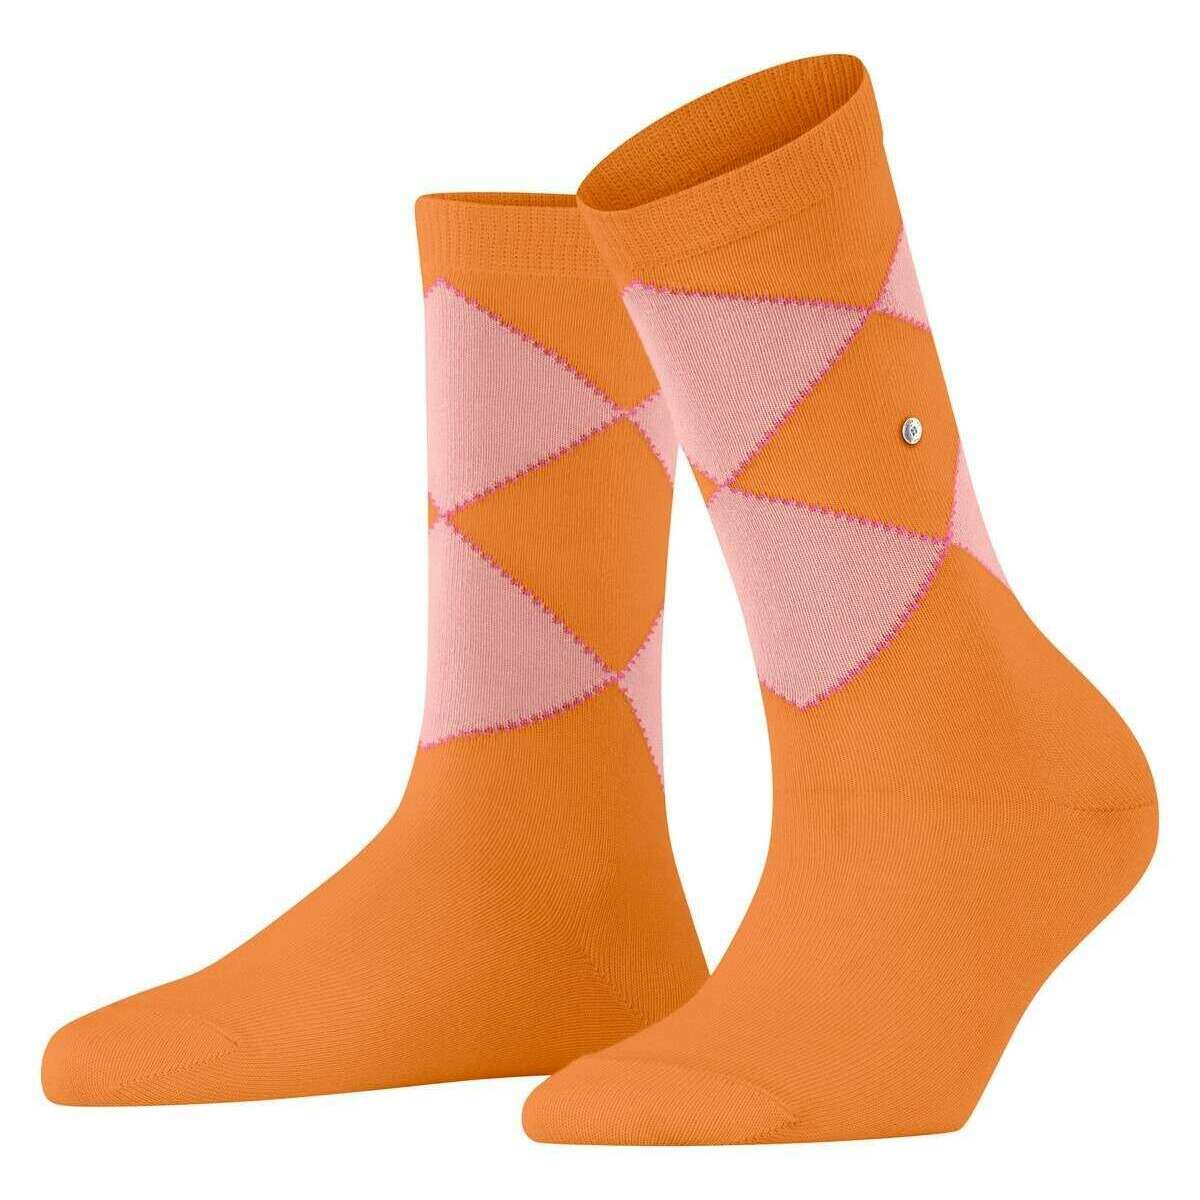 Burlington Darlington Socks - Mandarin Orange/Pink